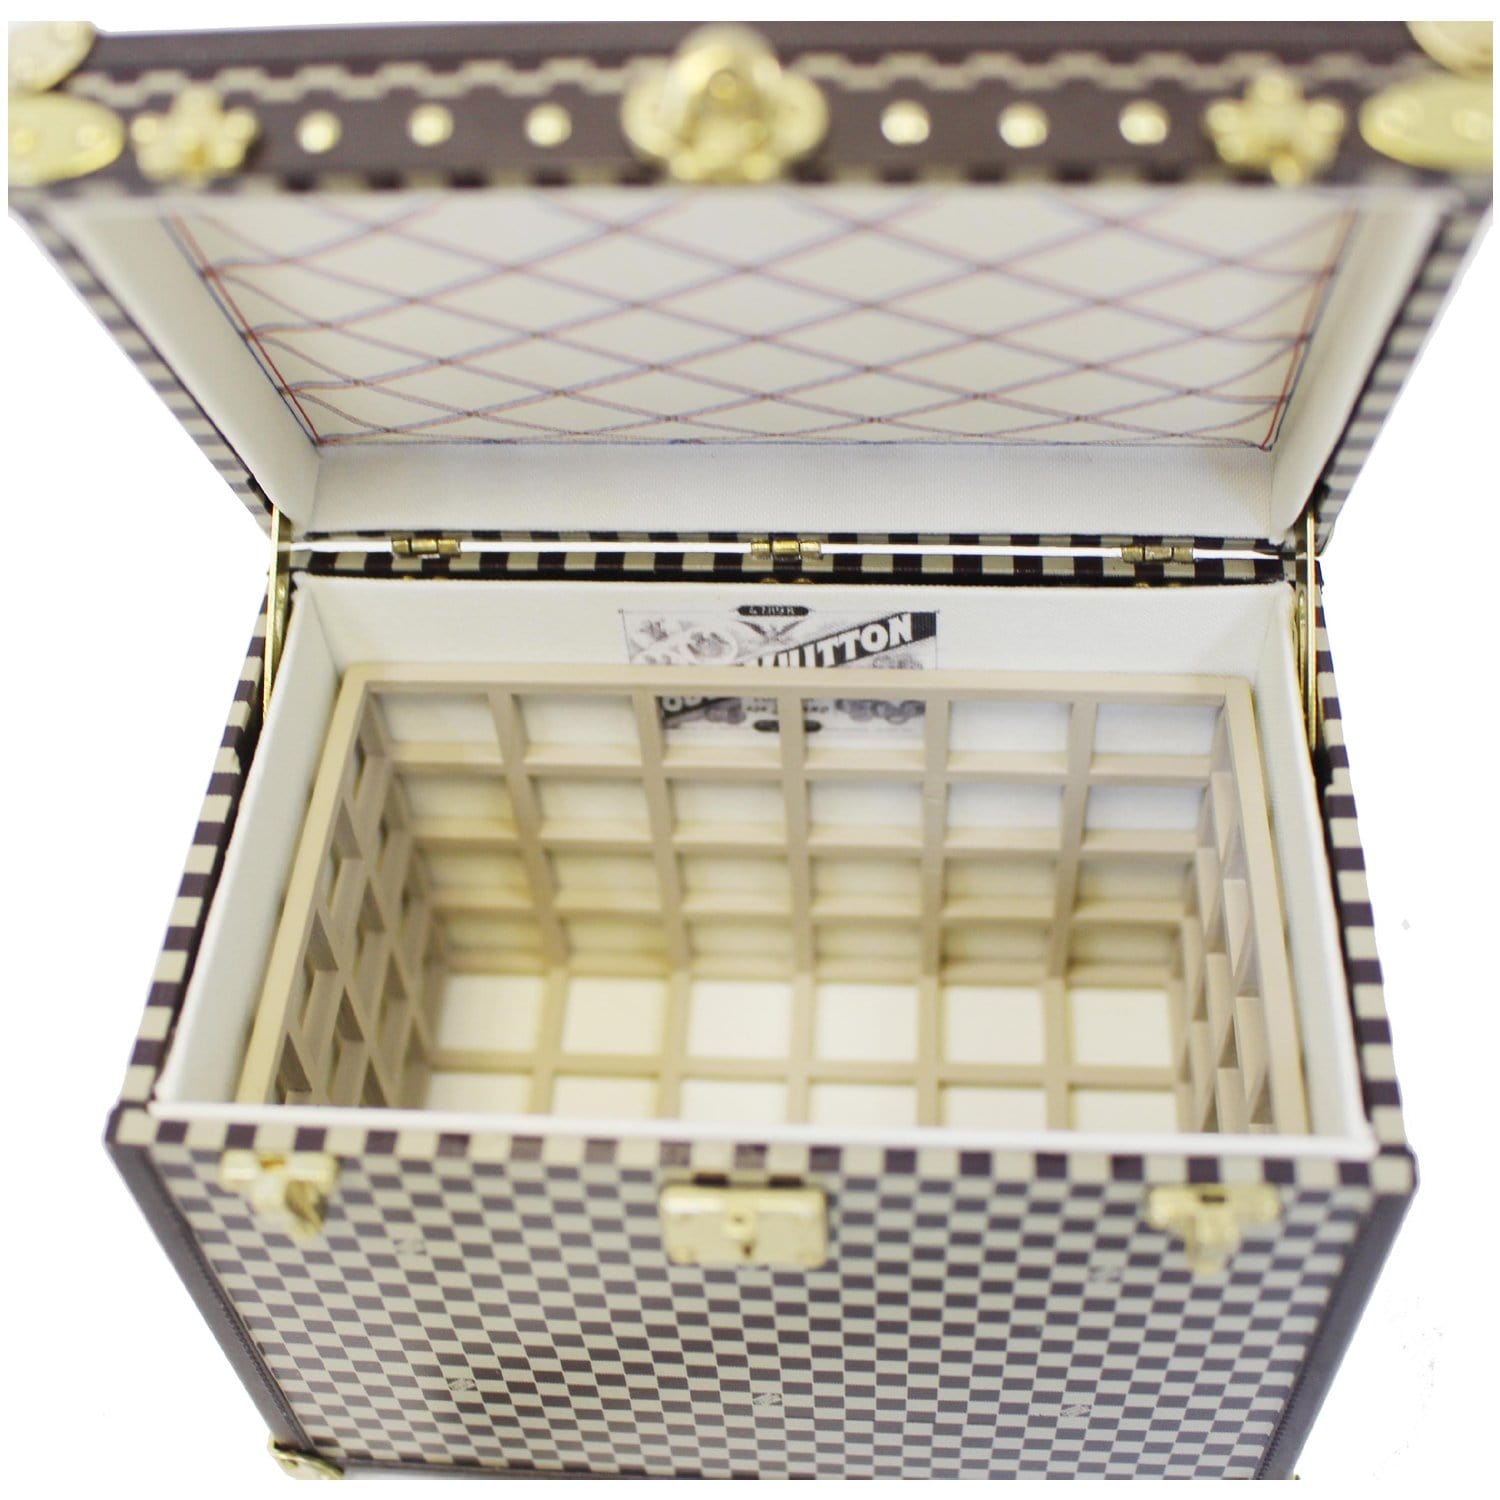 louis vuitton jewelry case jewelry box 55-ring box 